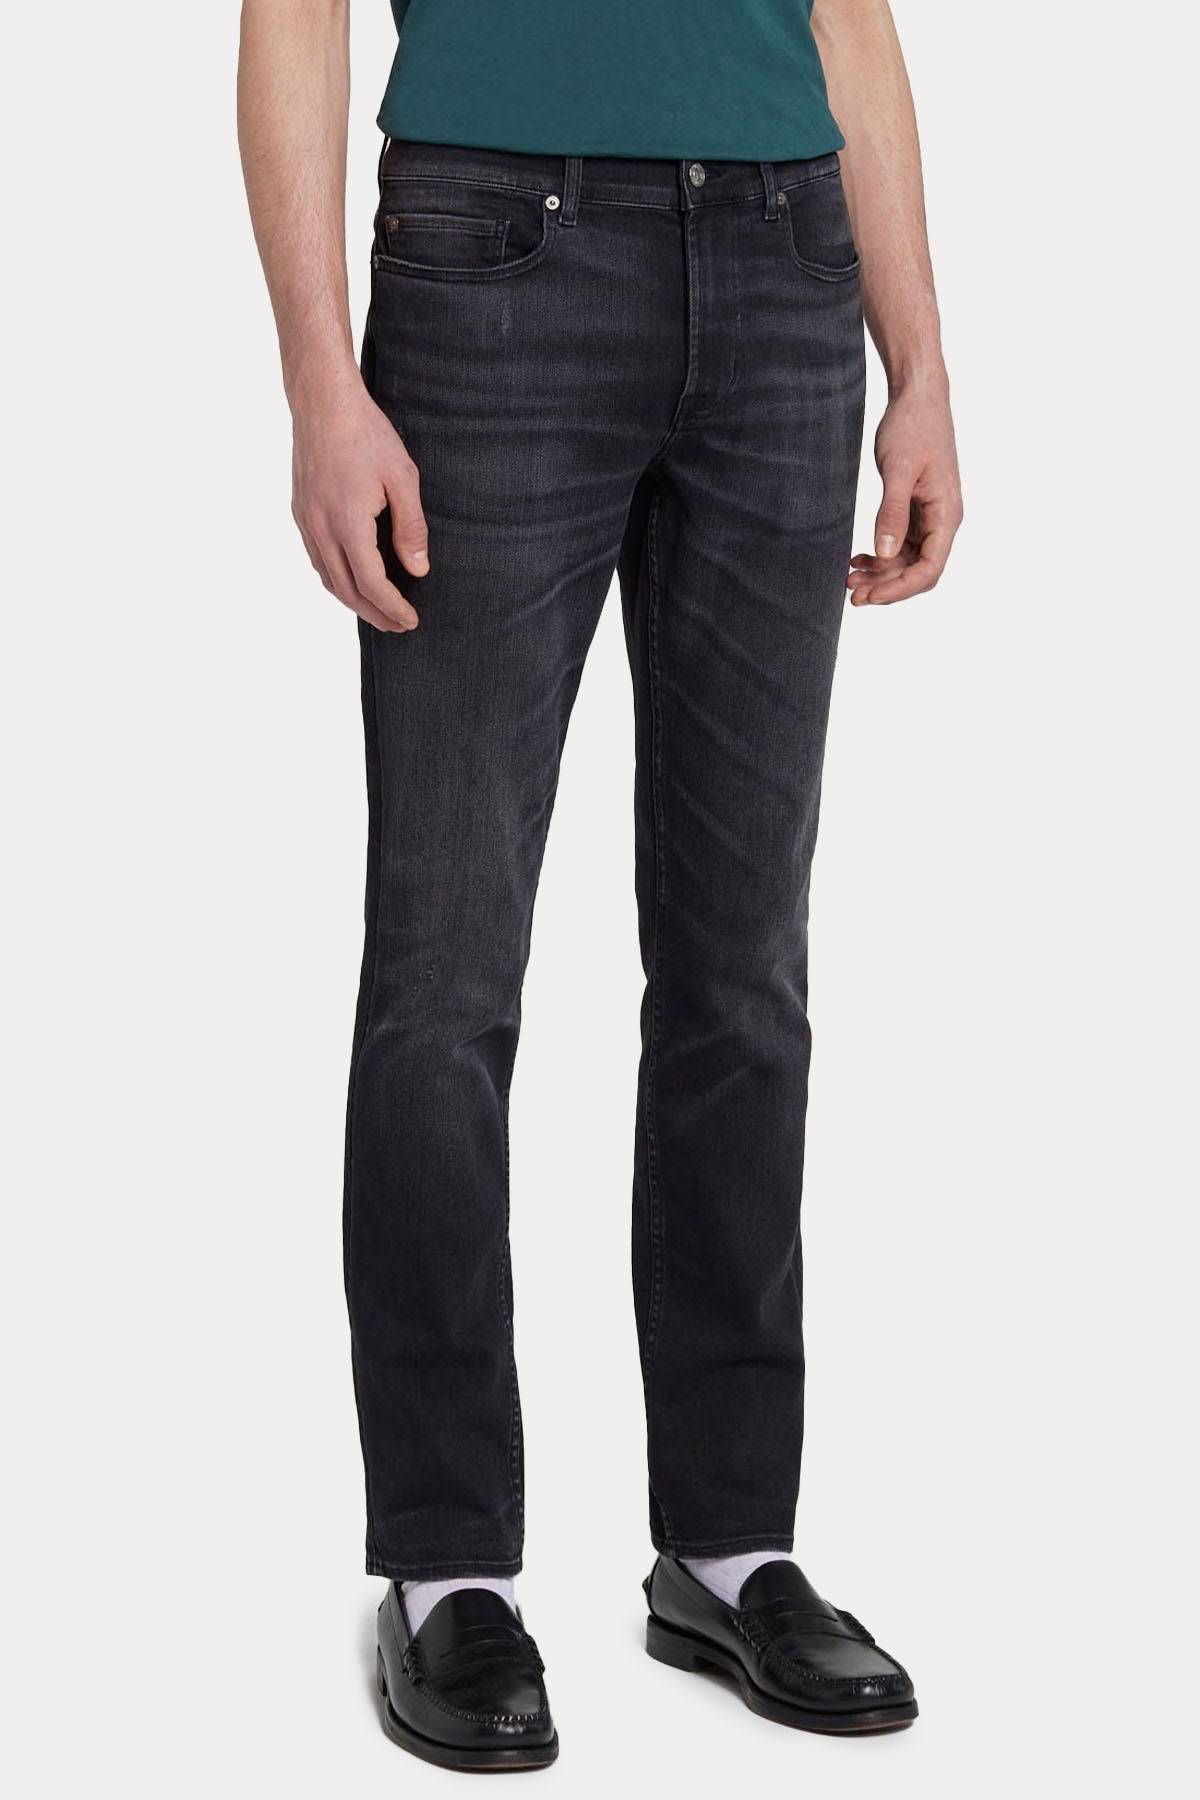 7 For All Mankind Paxtyn Skinny Fit Streç Yıkanmış Jeans-Libas Trendy Fashion Store